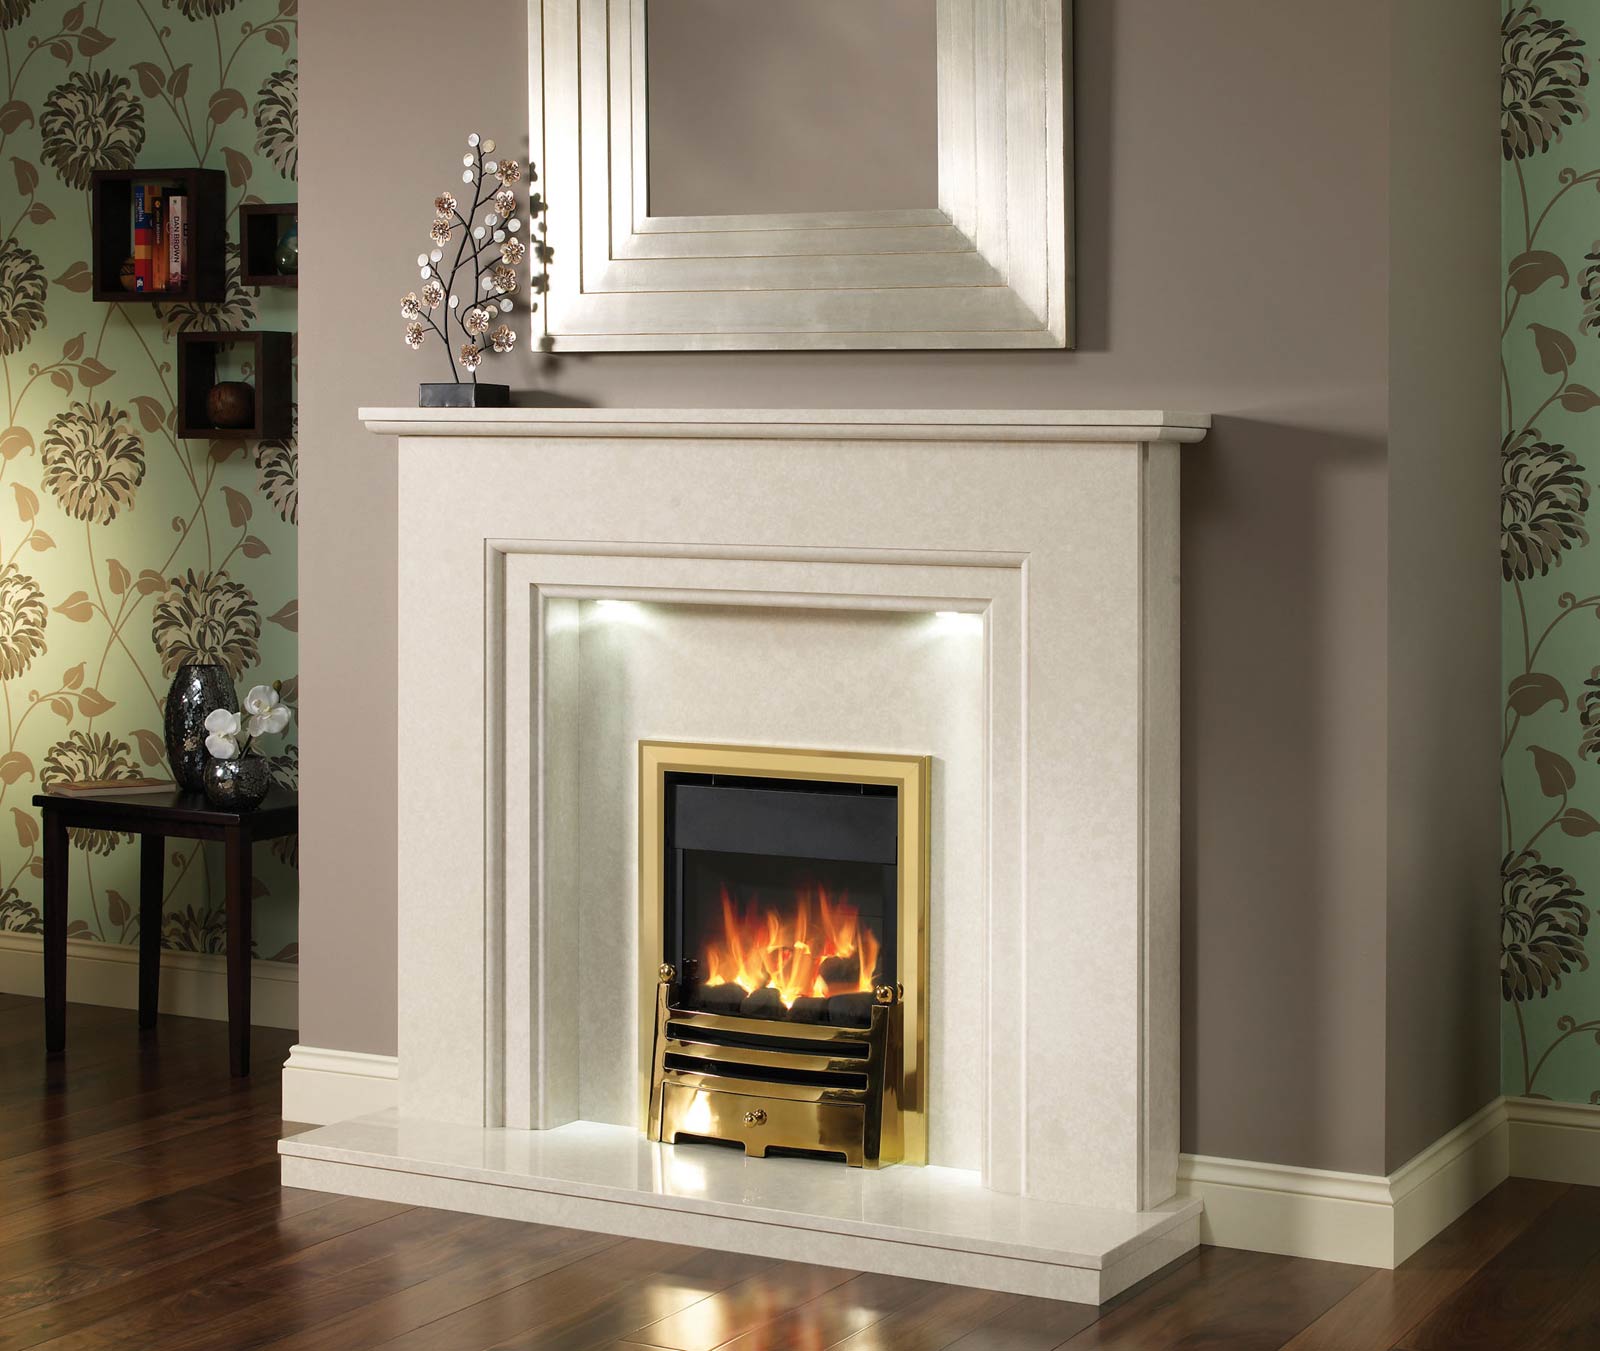 marble fireplace surround ideas photo - 5